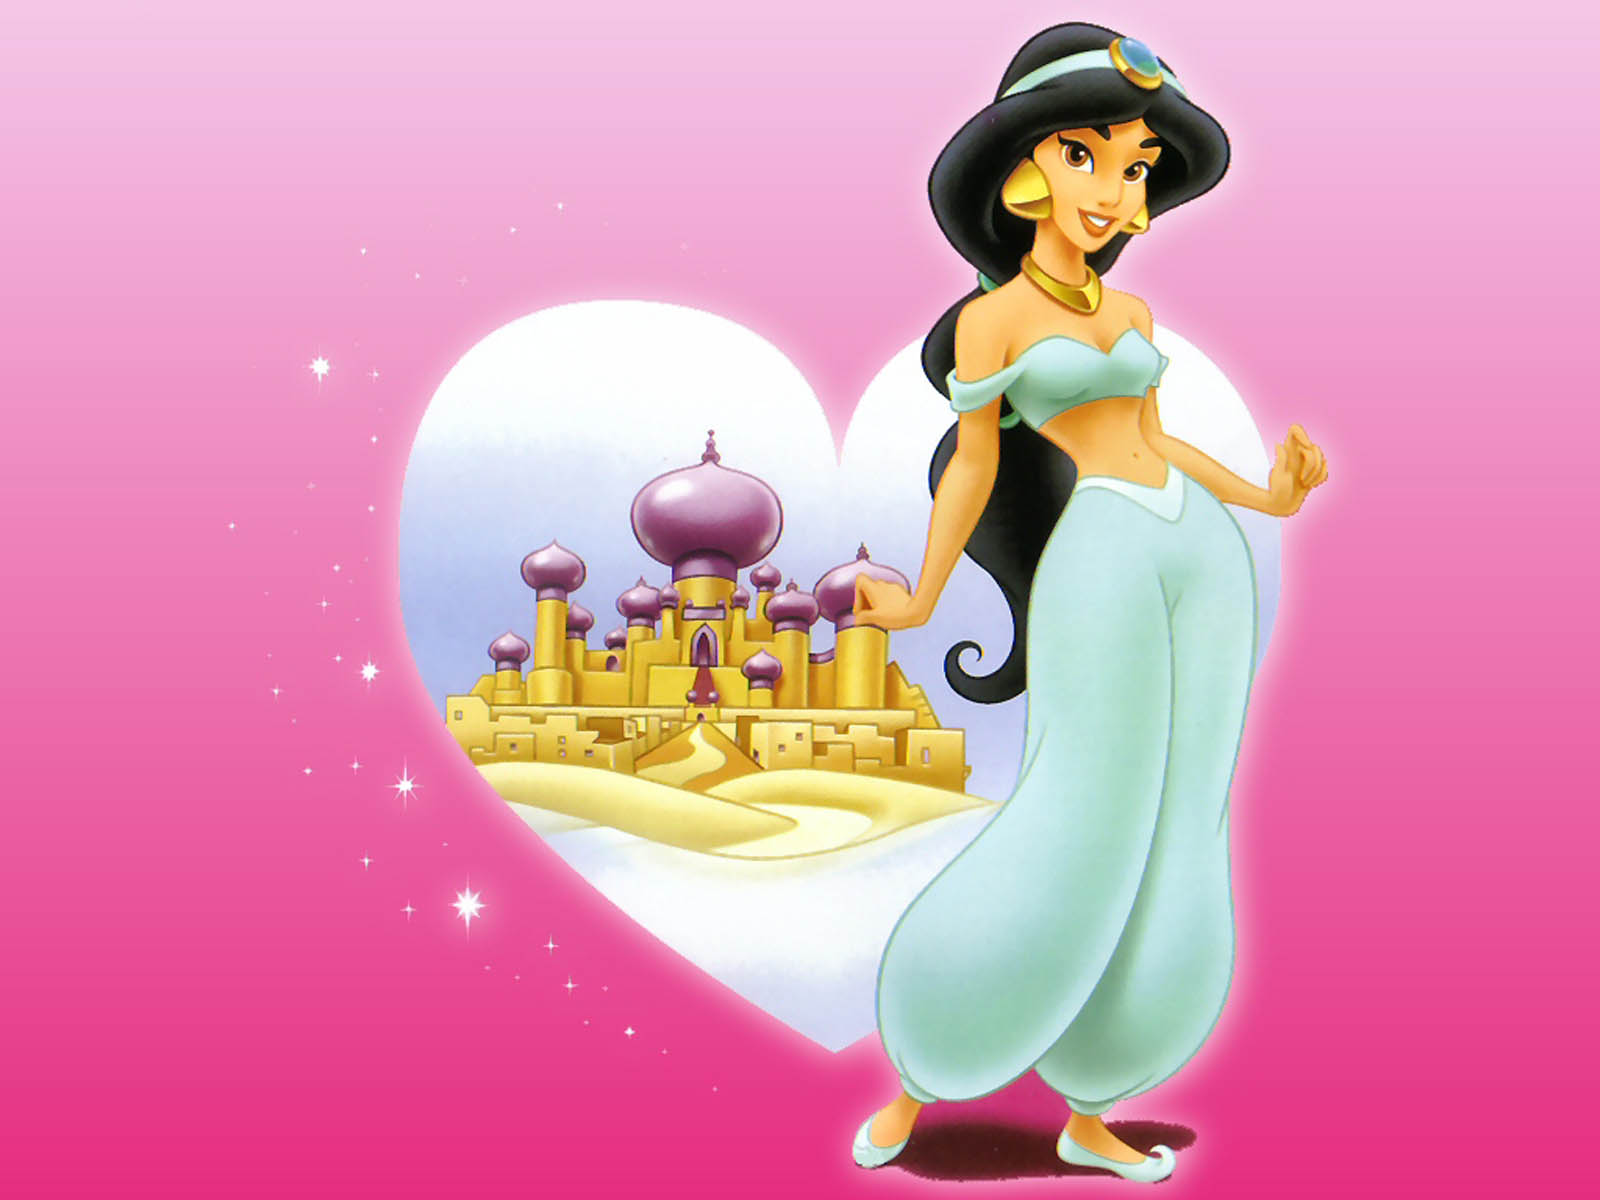 Tag Disney Princess Jasmine Wallpaper Background Photos Image